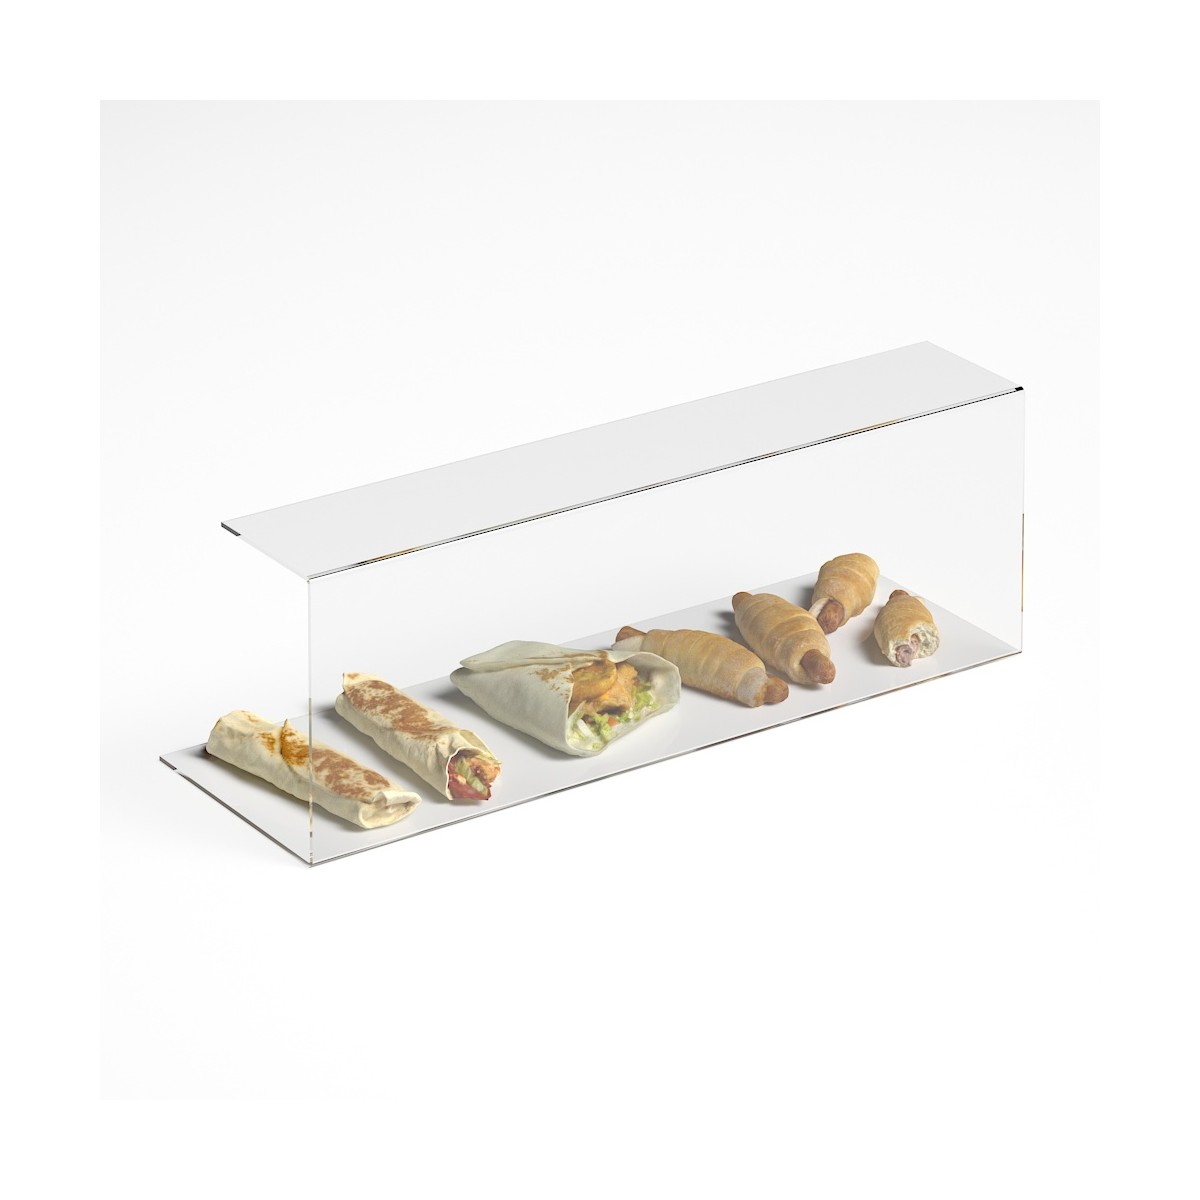 E-1185 PAR-C - Parafiato parasputi in plexiglass trasparente per alimenti - Misure: 90x30x H30 cm